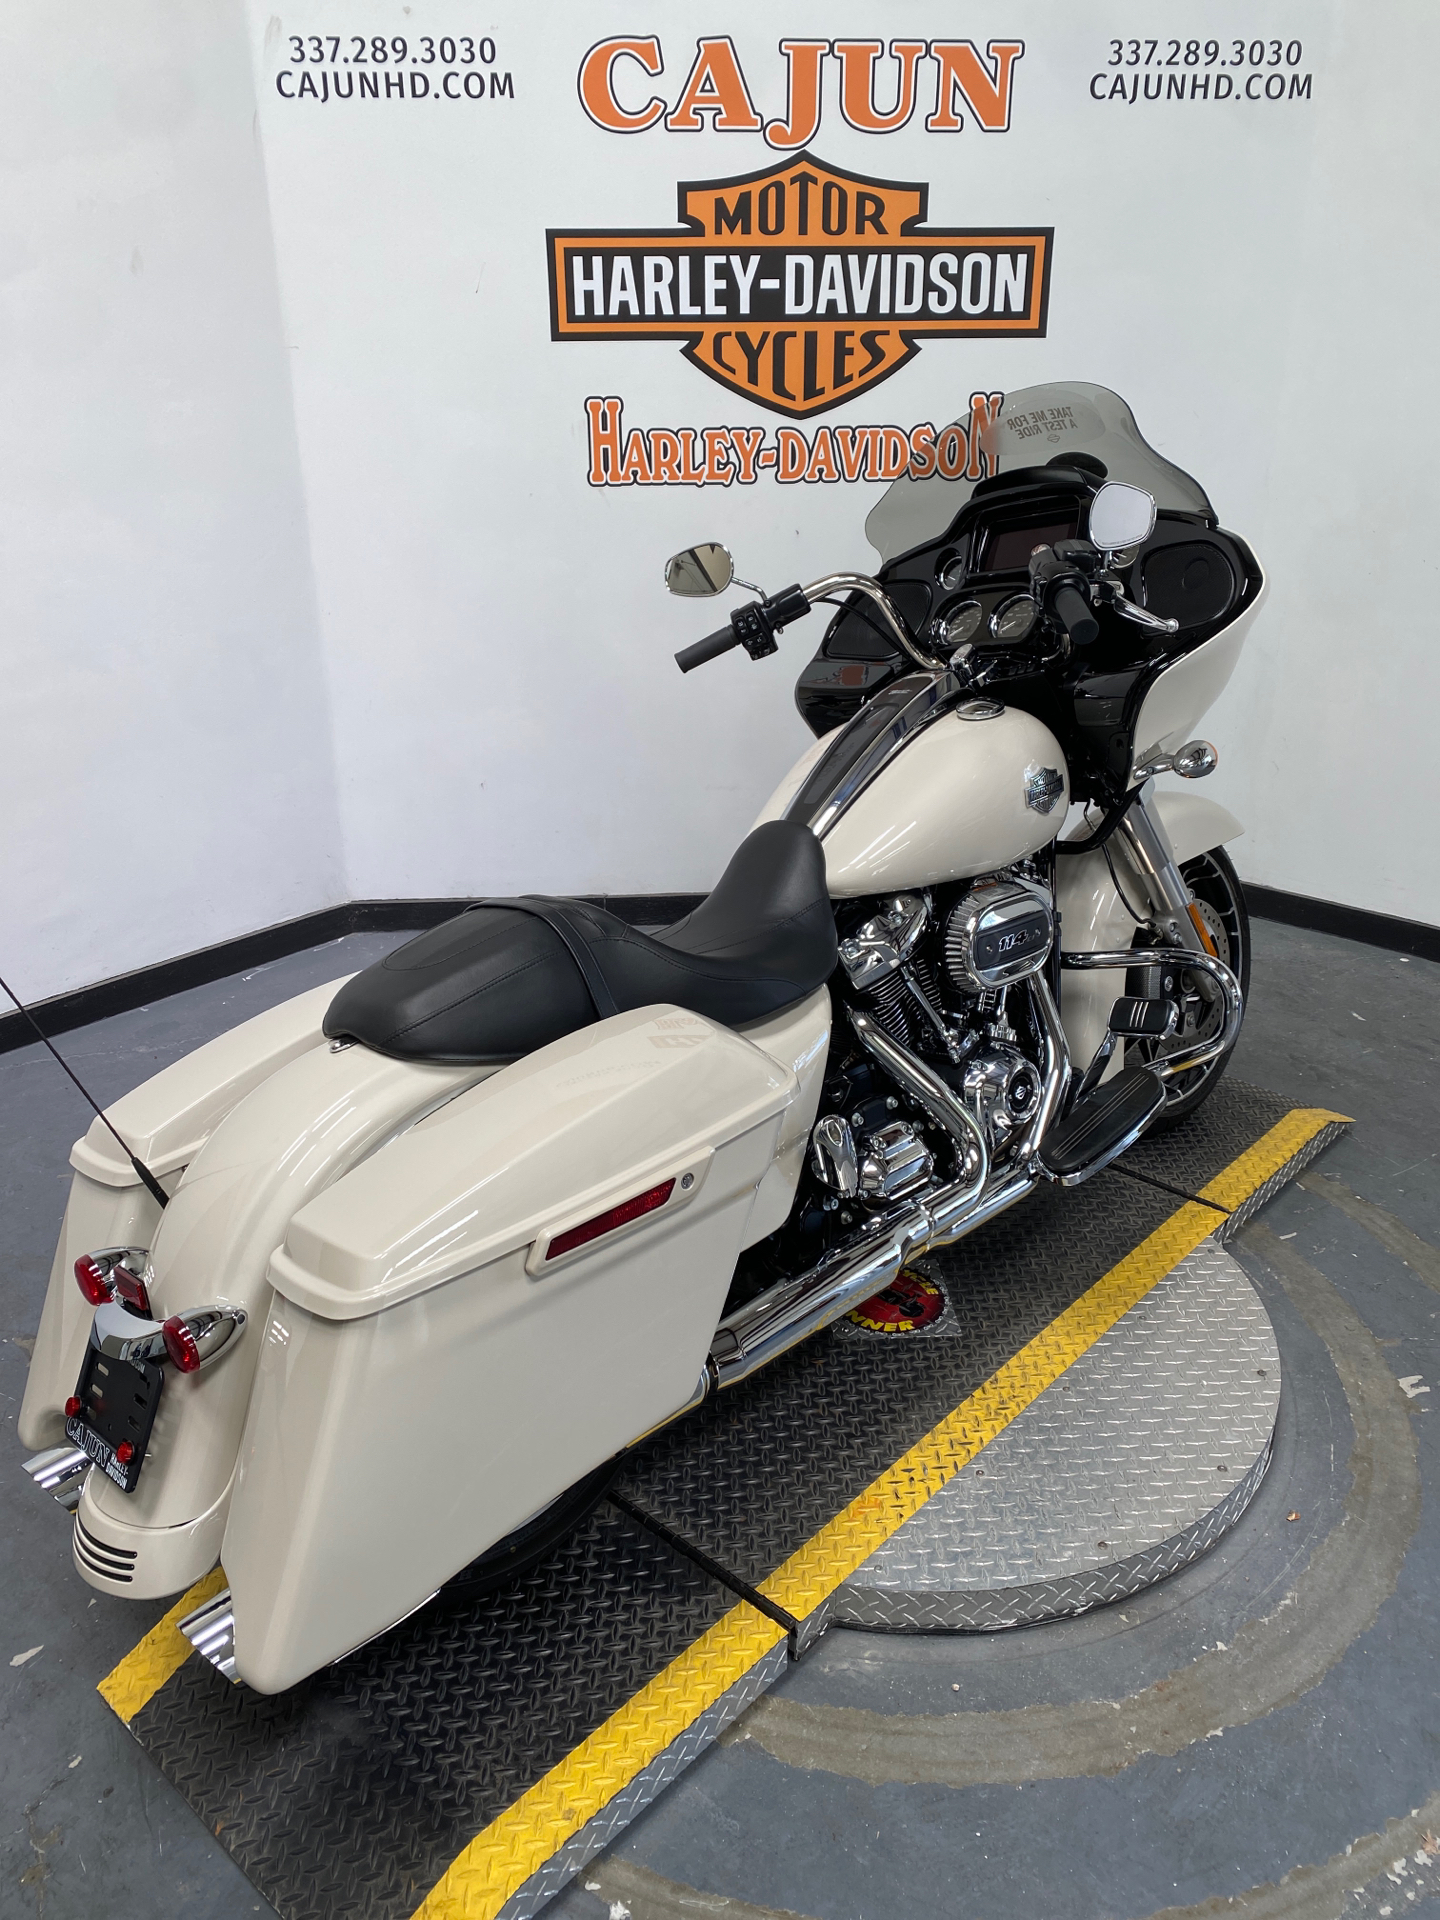 2022 Harley-Davidson Road Glide Special for sale - Photo 6